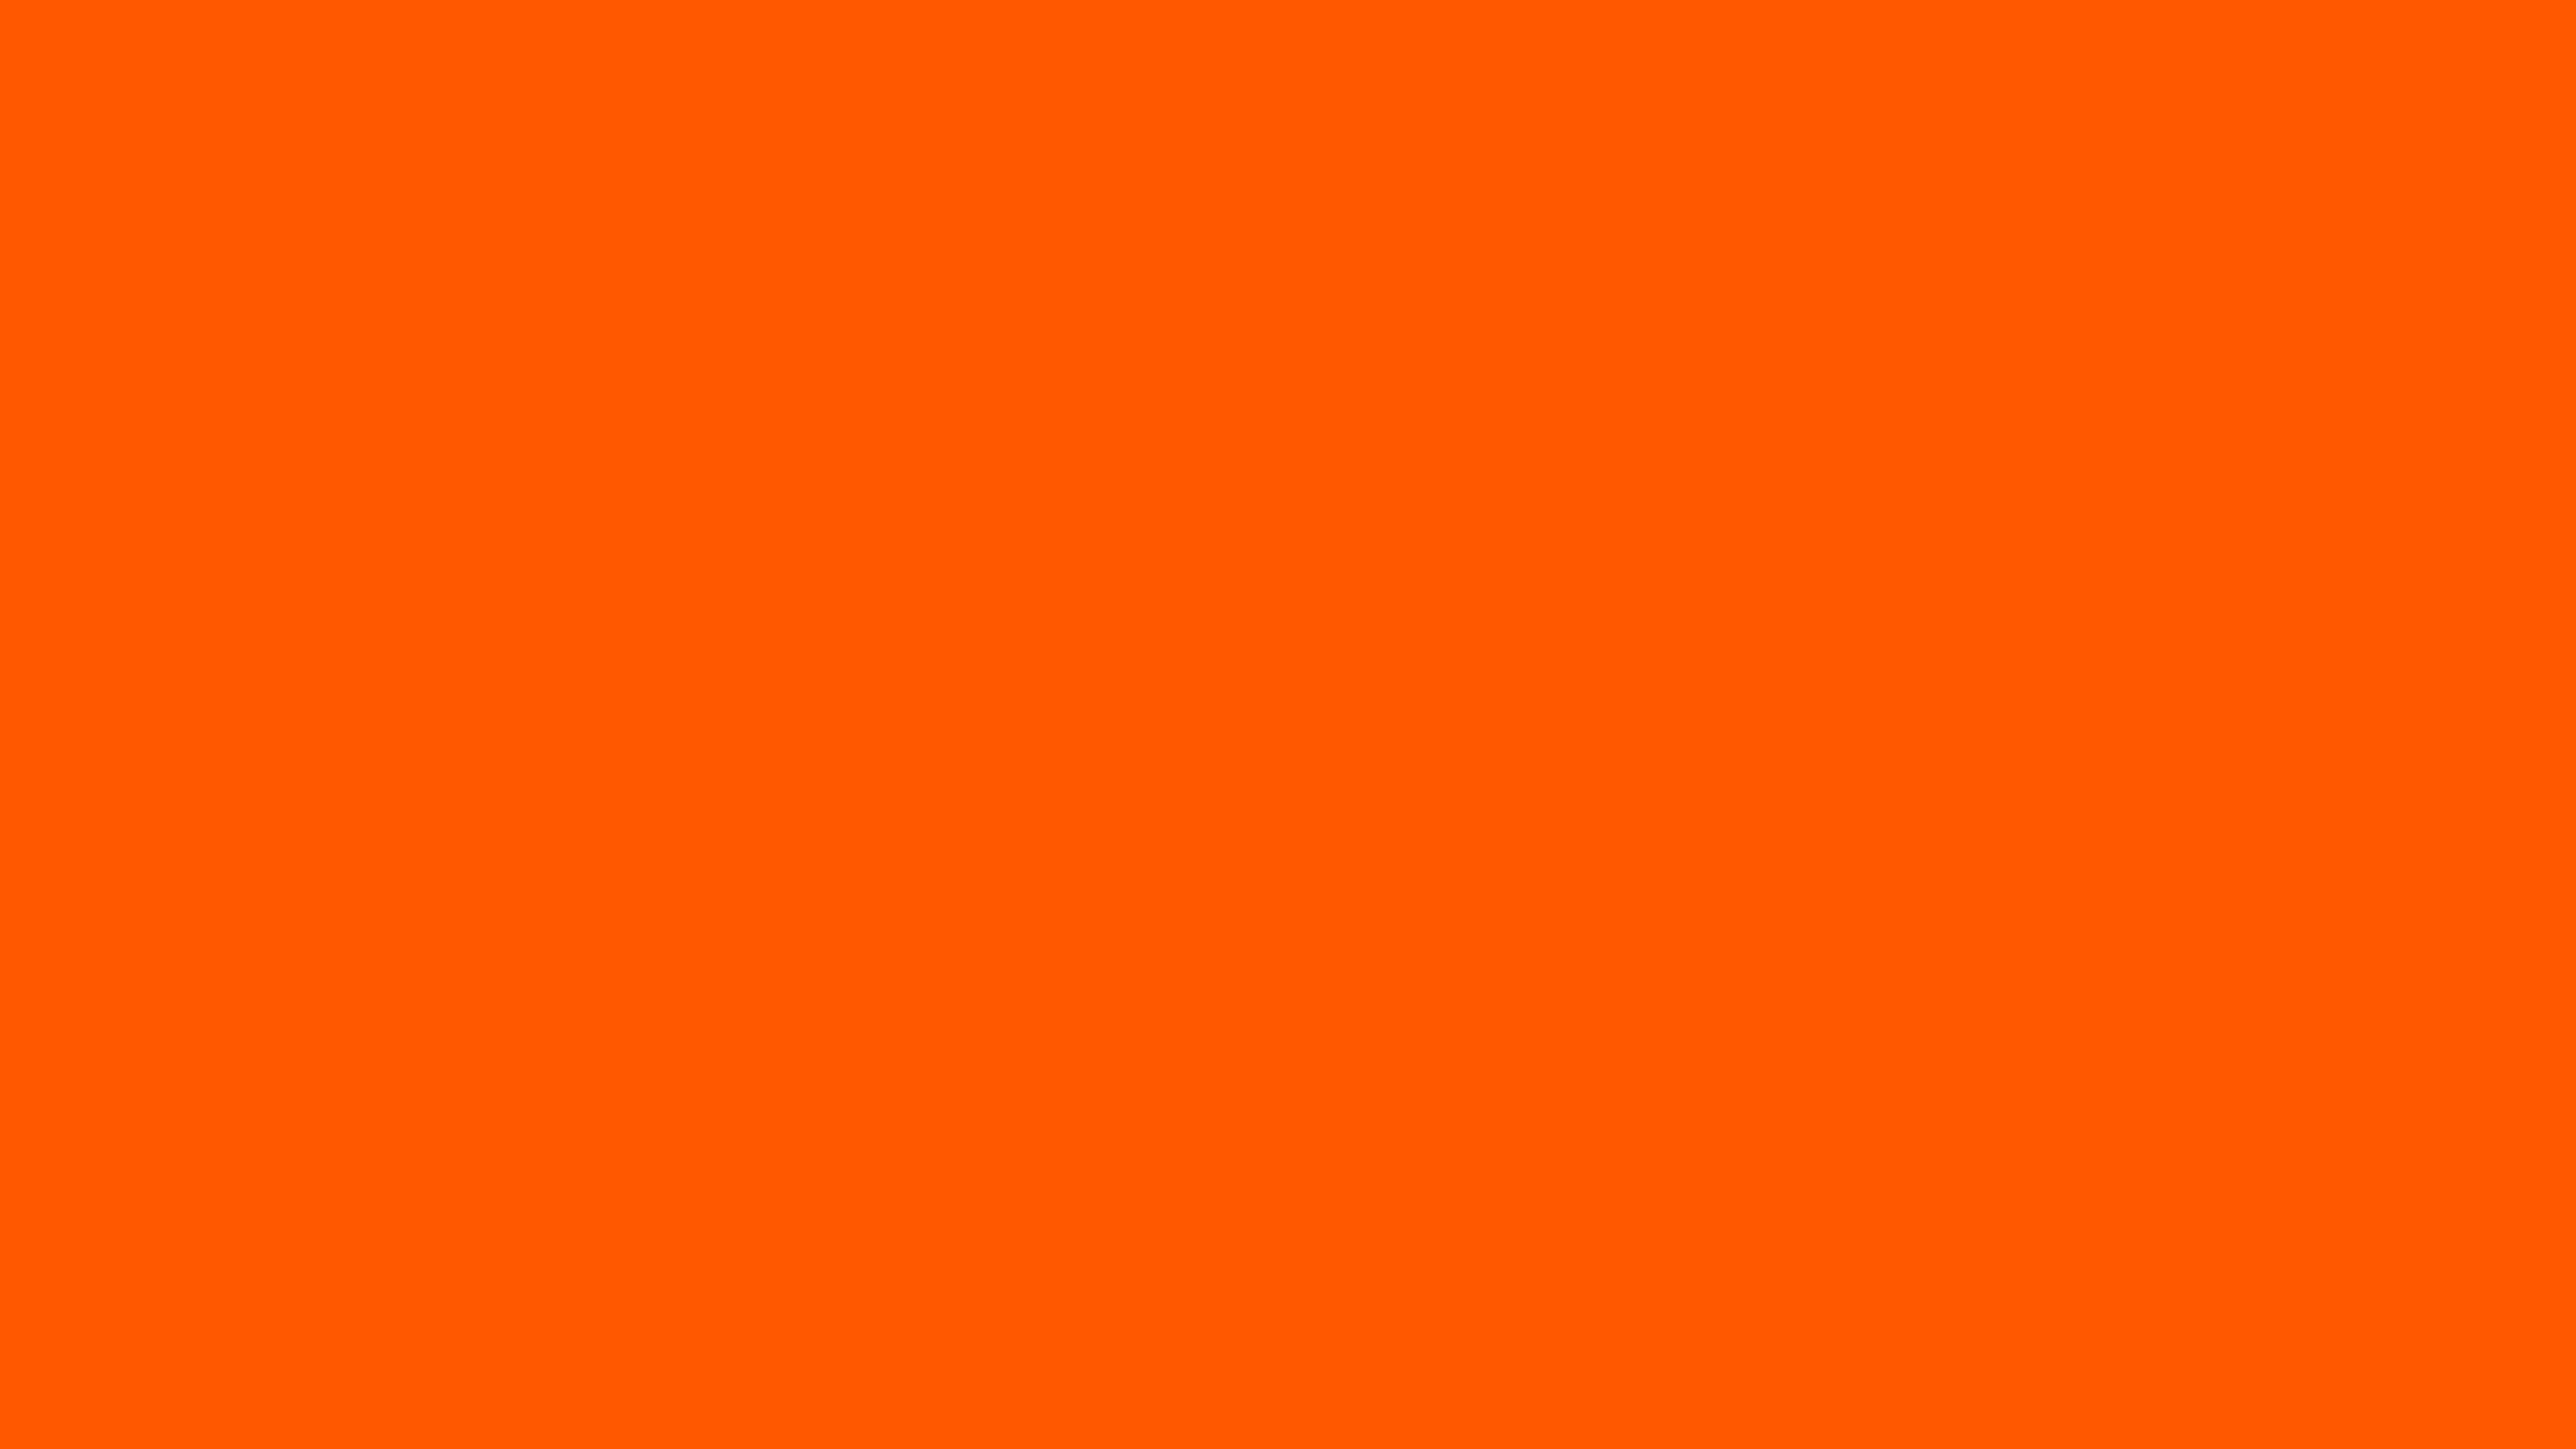 4096x2304 Orange Pantone Solid Color Background